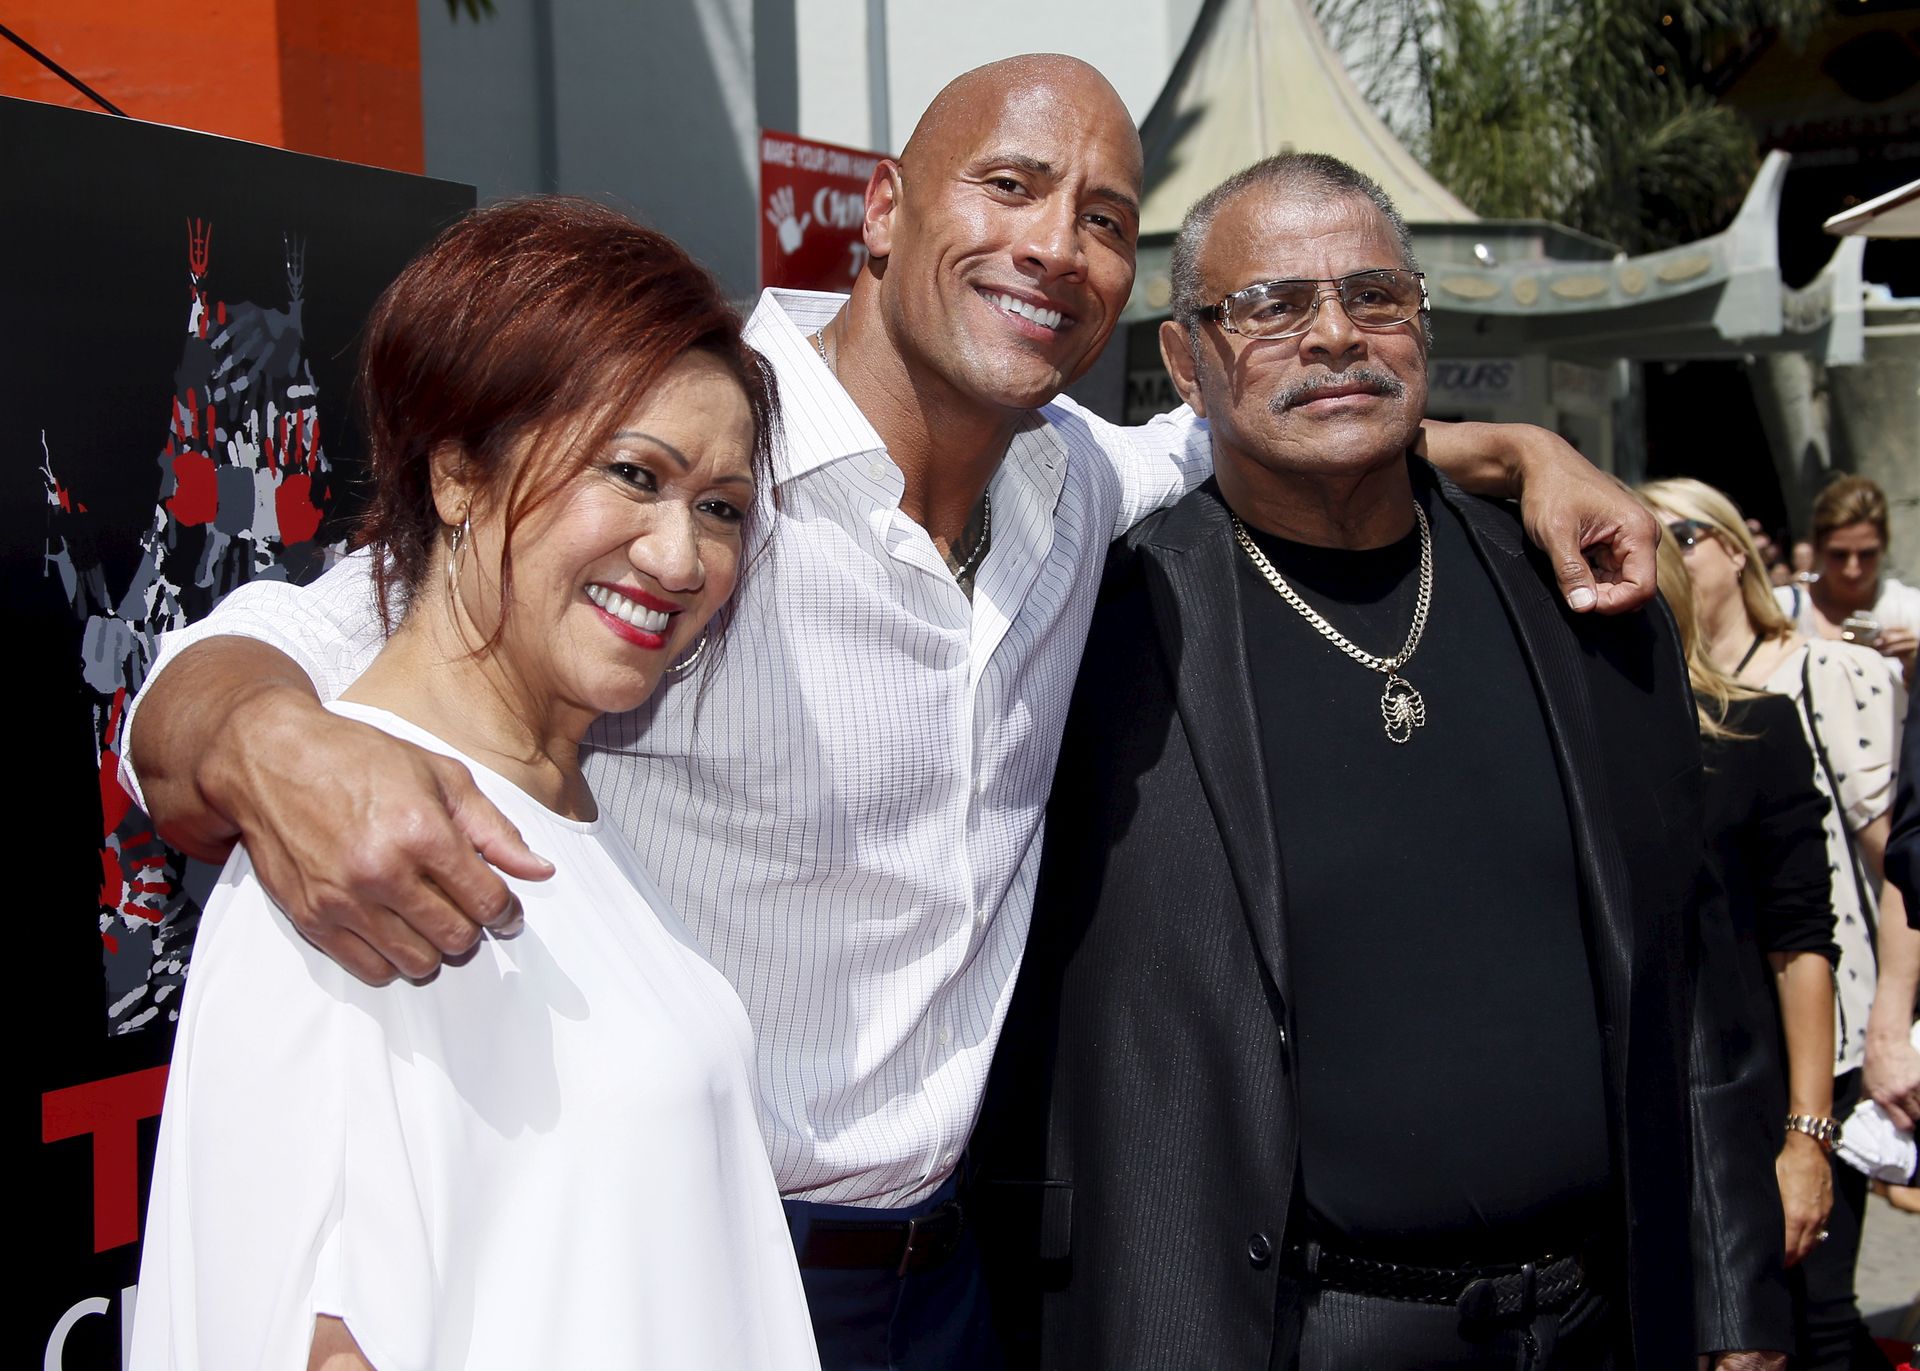 Dwayne "The Rock" Johnson poseerimas oma ema Ata ning isa Rockyga...